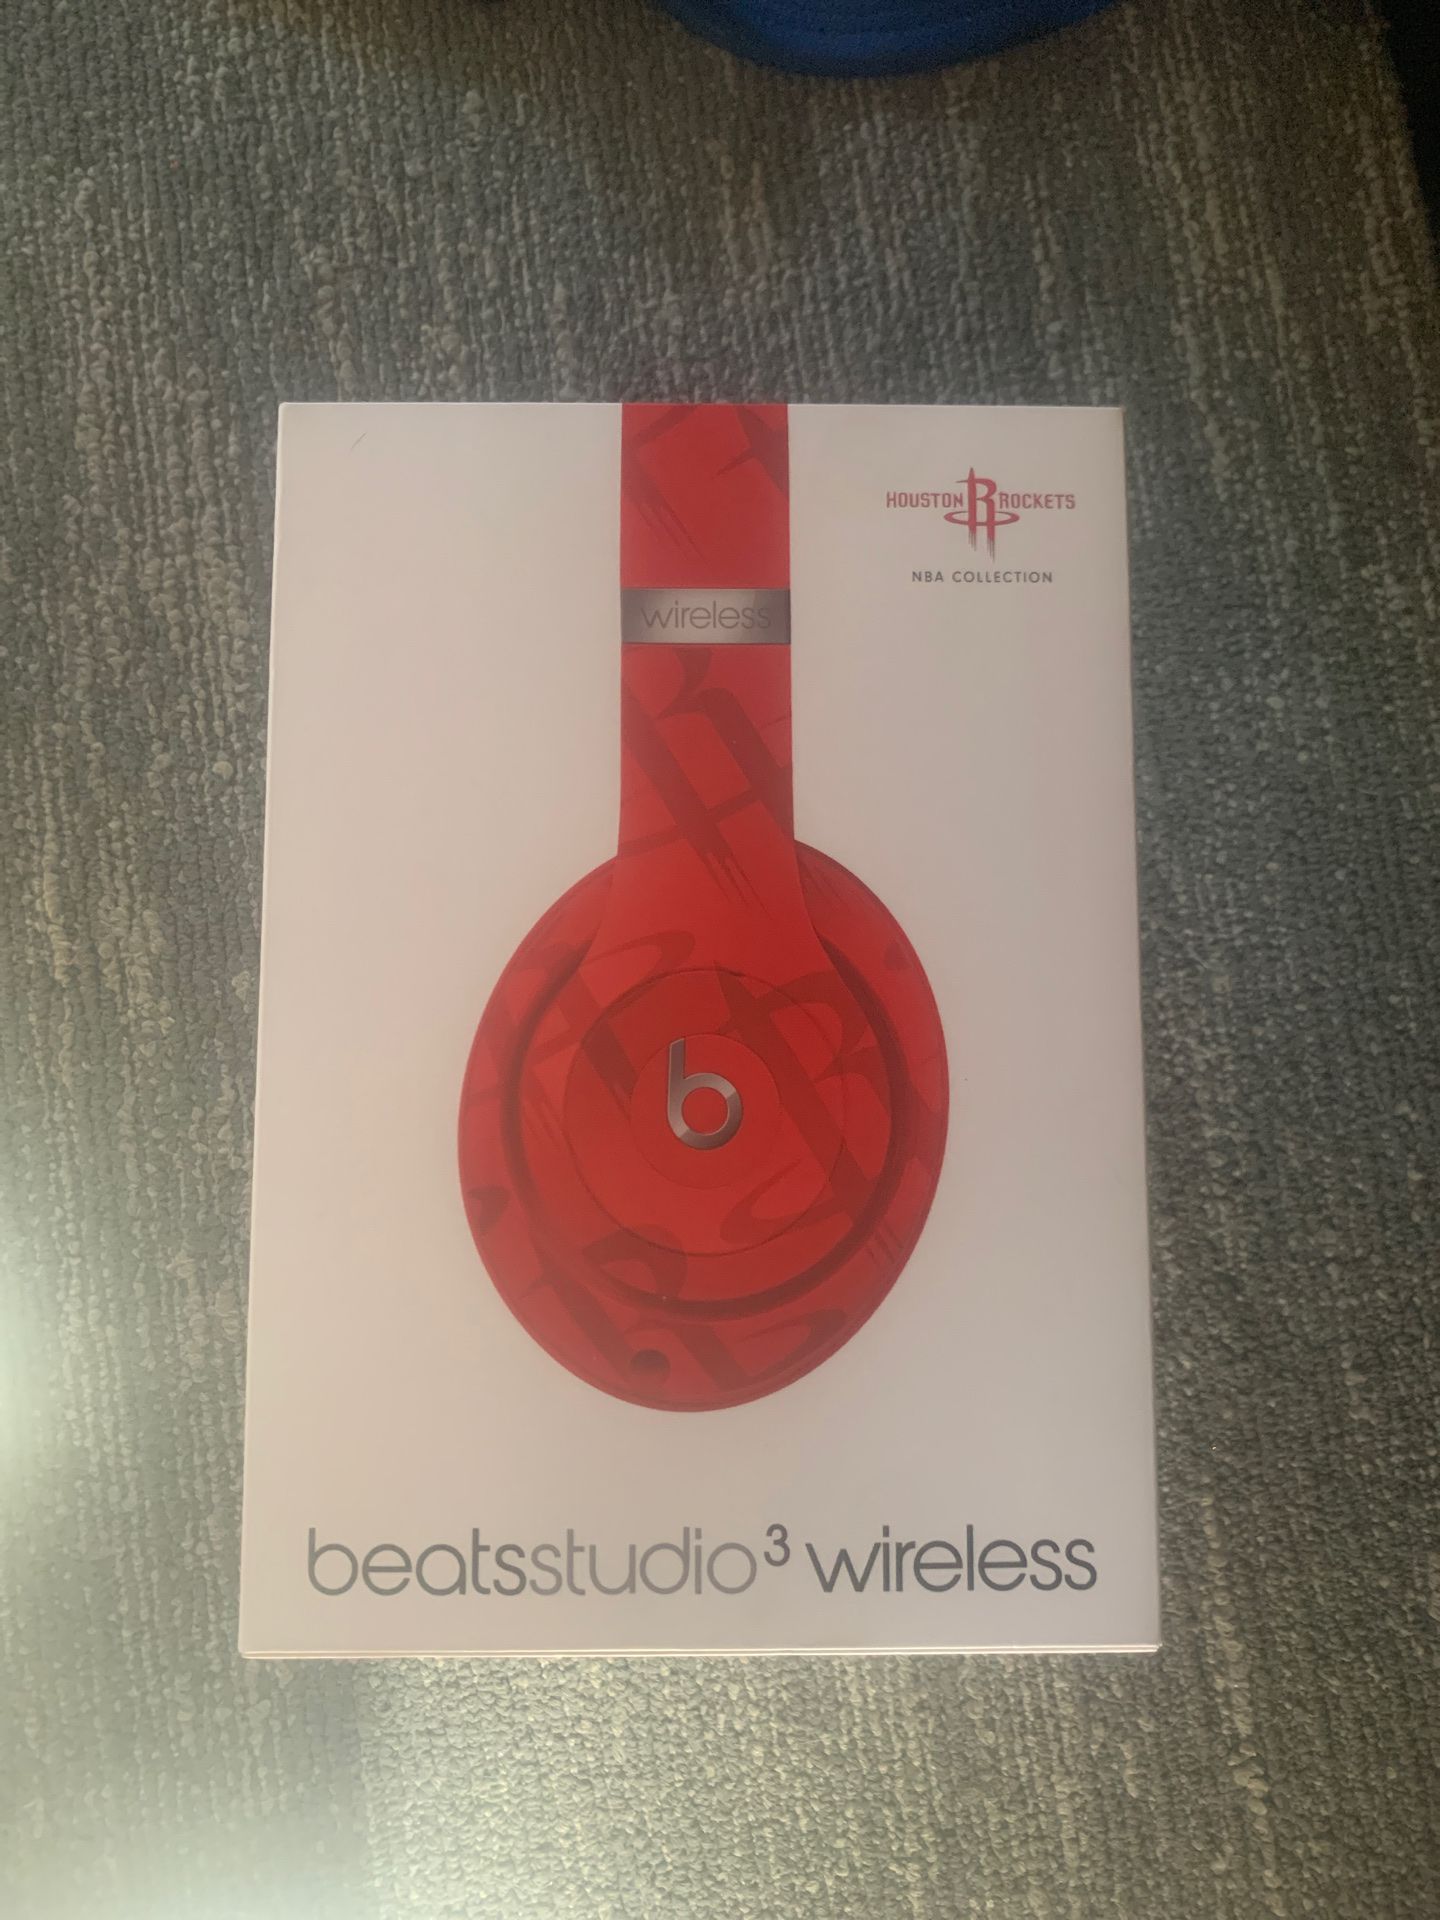 Beats studio3 wireless NBA collection Houston Rockets Edition